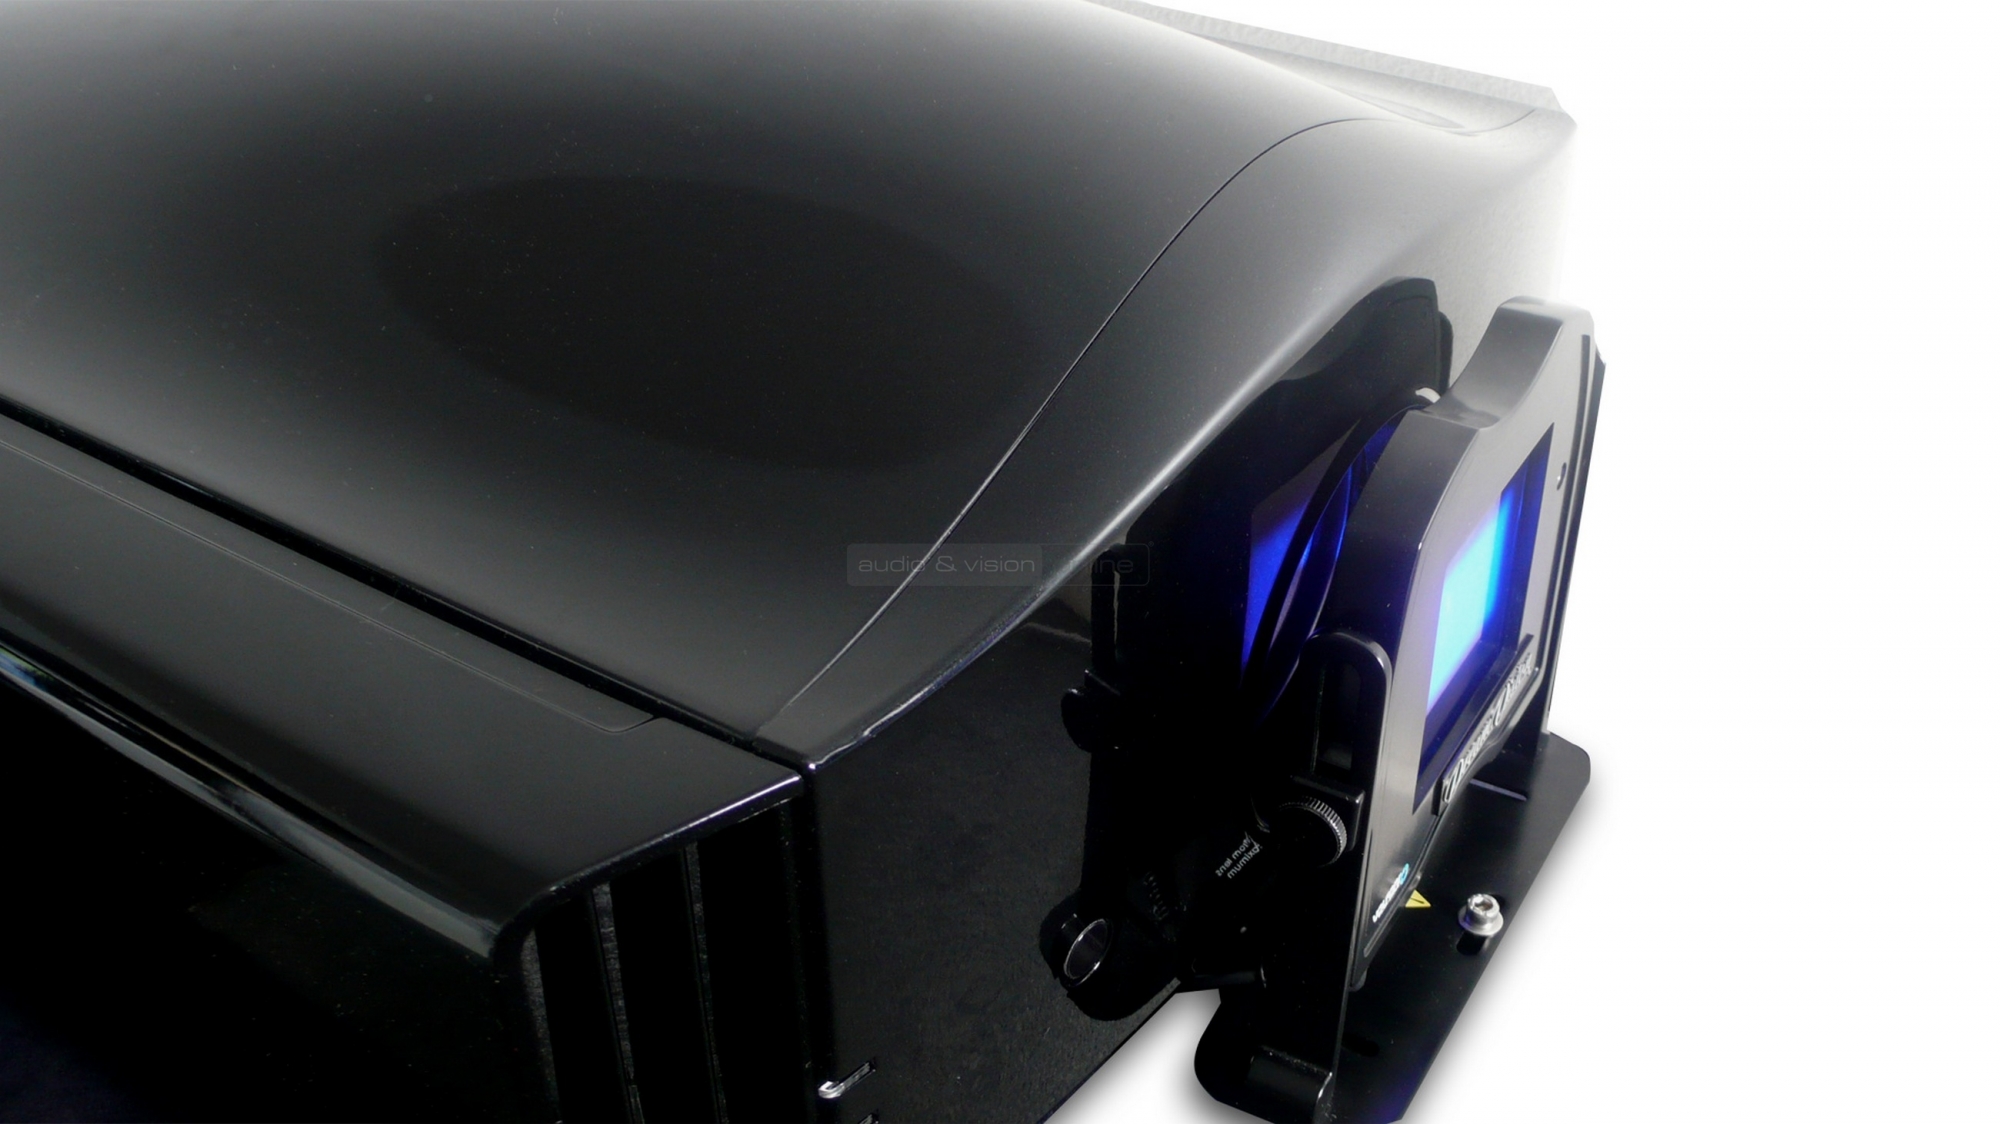 DreamVision passzív 3D projektor